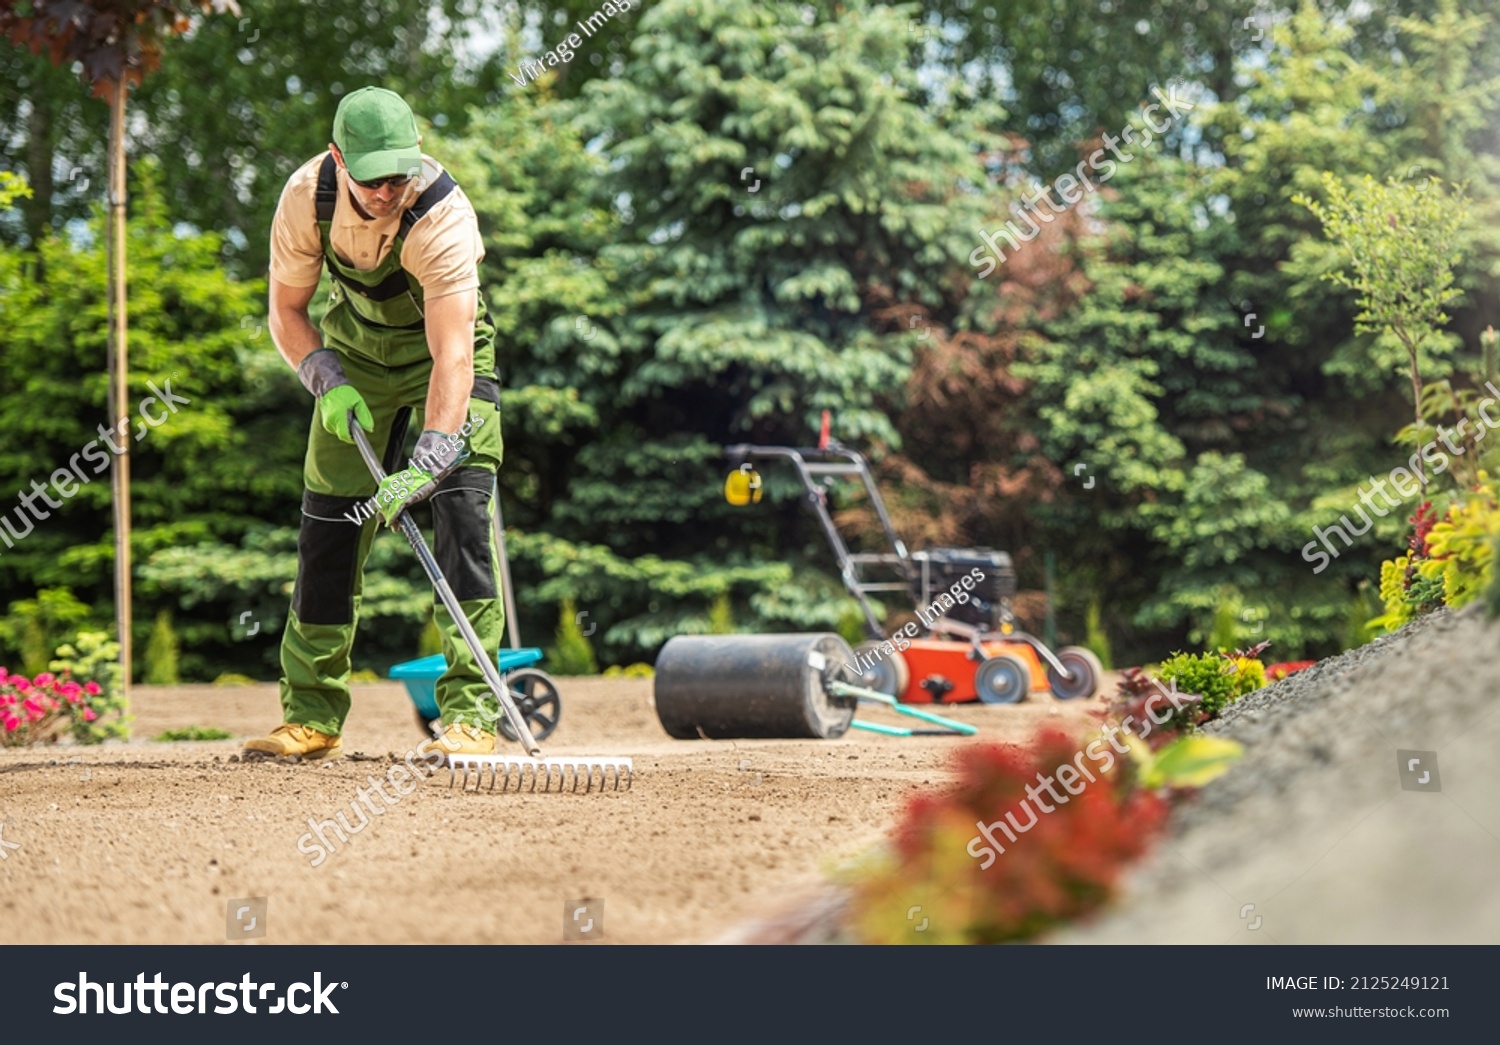 Caucasian Garden Specialist with Rake Preparing Soil For Natural Grass Turfs Installation. Landscaping Theme. #2125249121